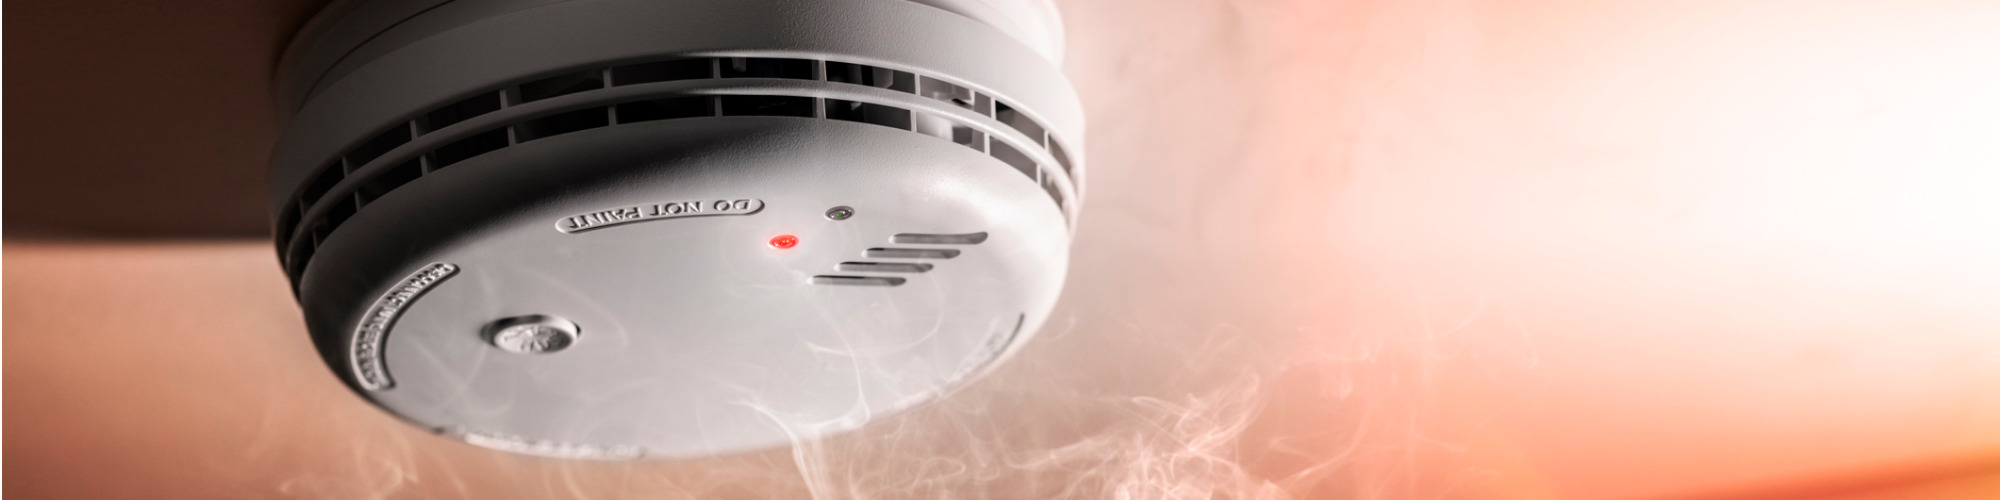 Smoke & Carbon Monoxide Alarms - Compliance Guidance for Landlords